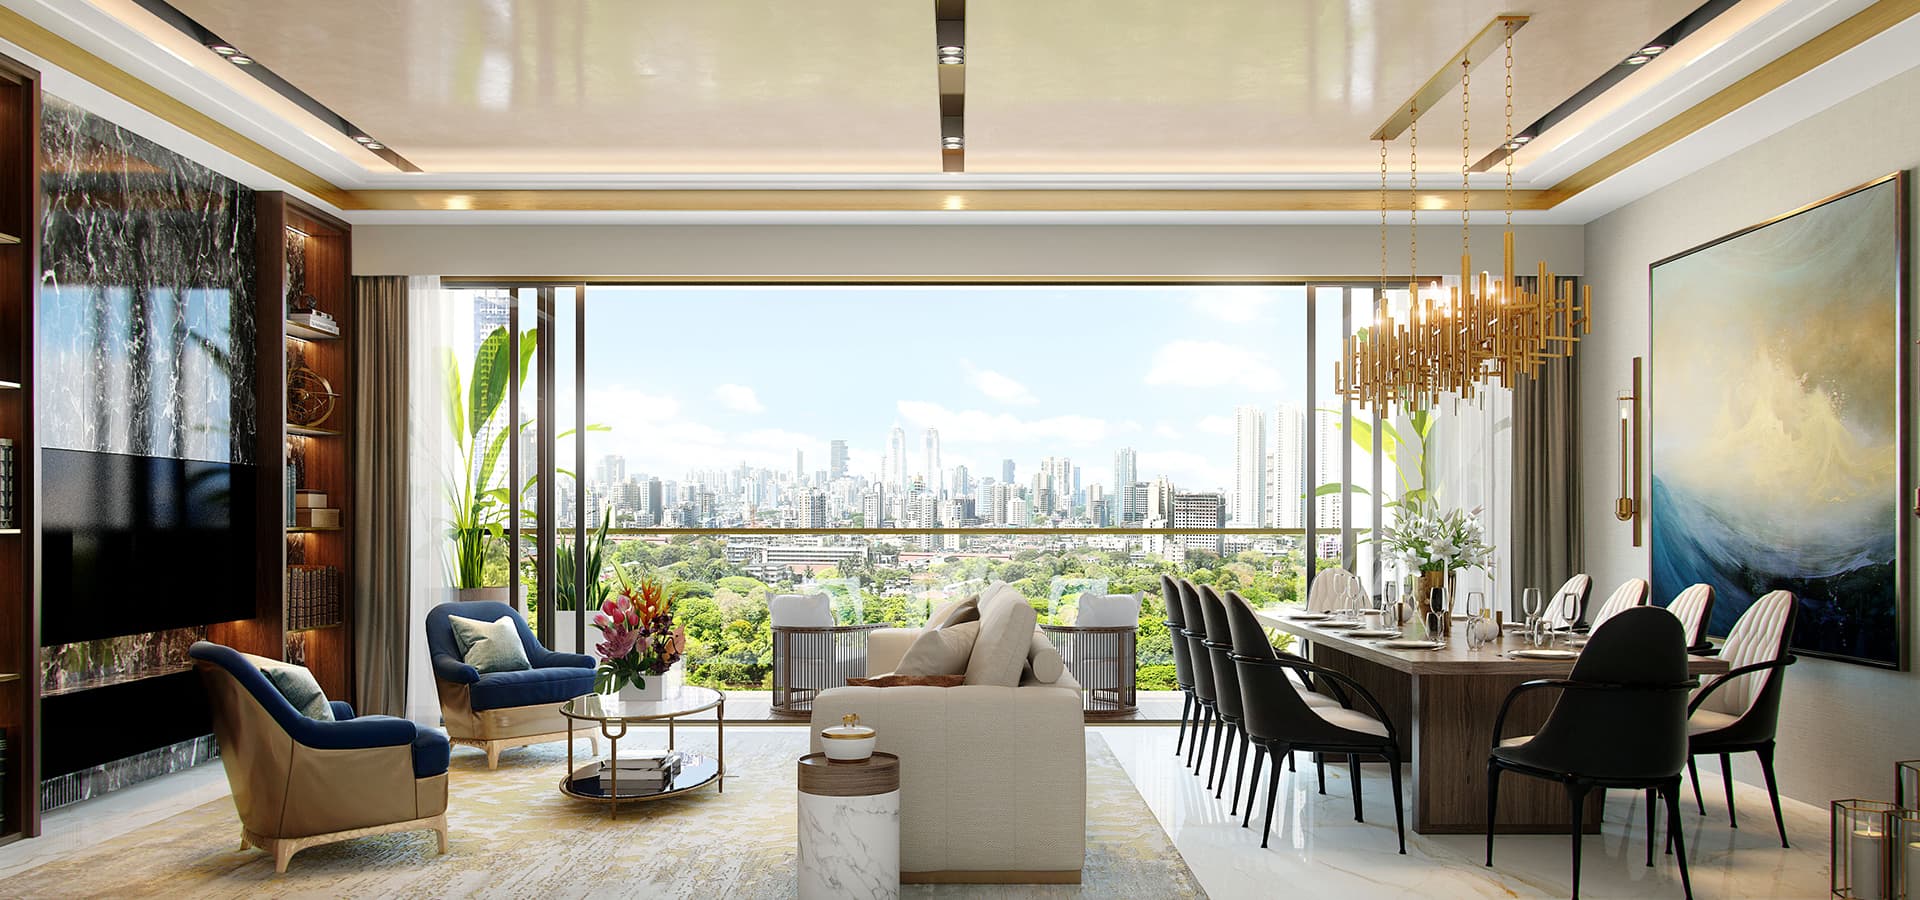 Piramal Realty's interior showcases a spacious living room, epitomizing luxury apartments in Mumbai.